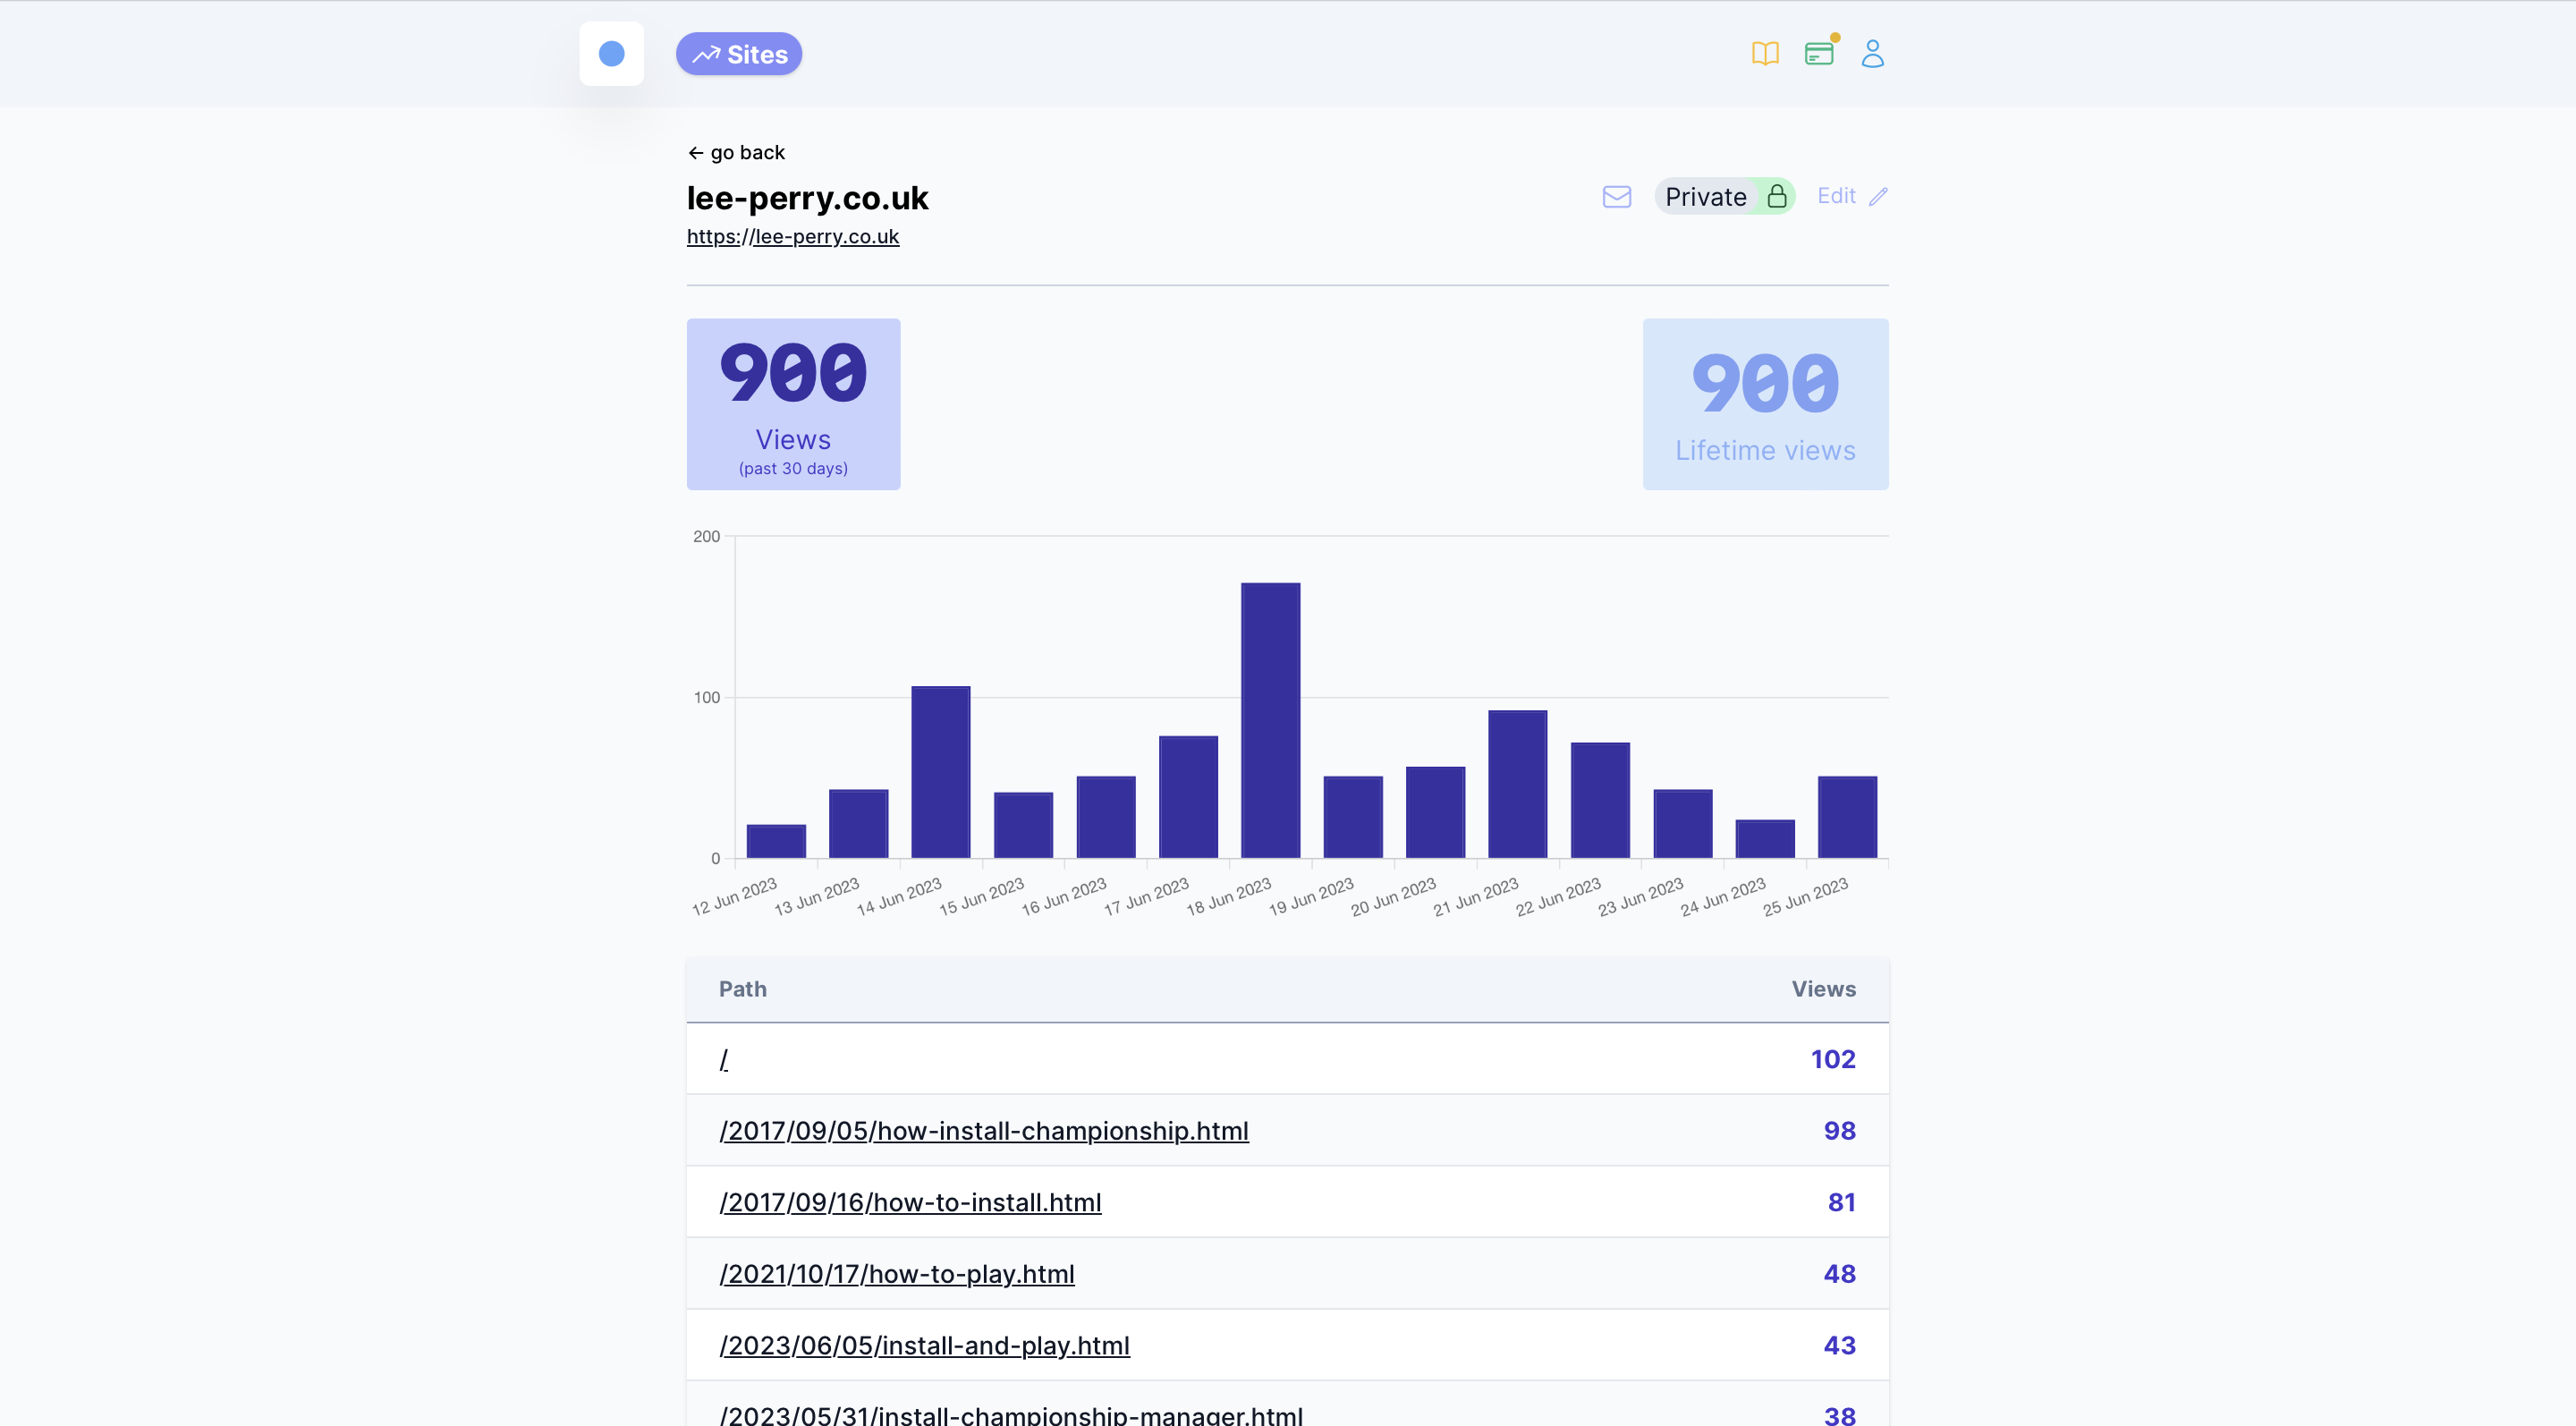 tinylytics dashboard showing website view statistics